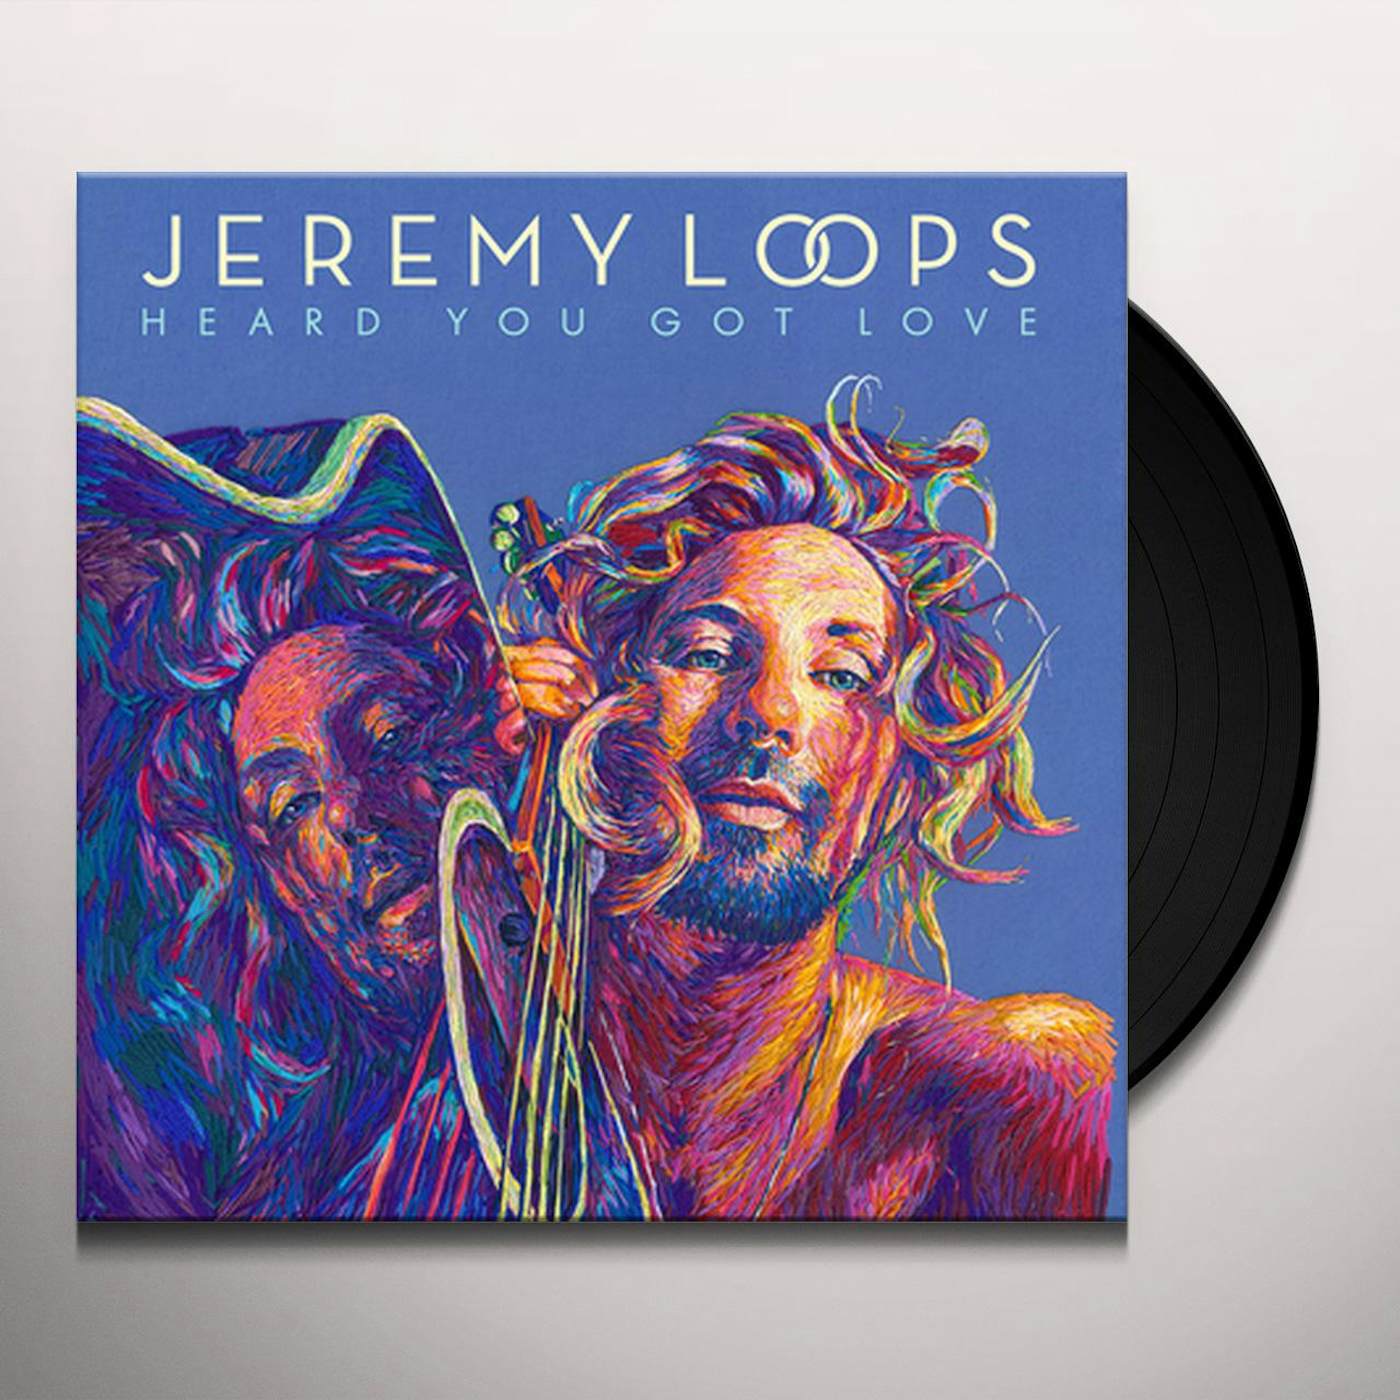 Jeremy Loops Heard You Got Love Vinyl Record